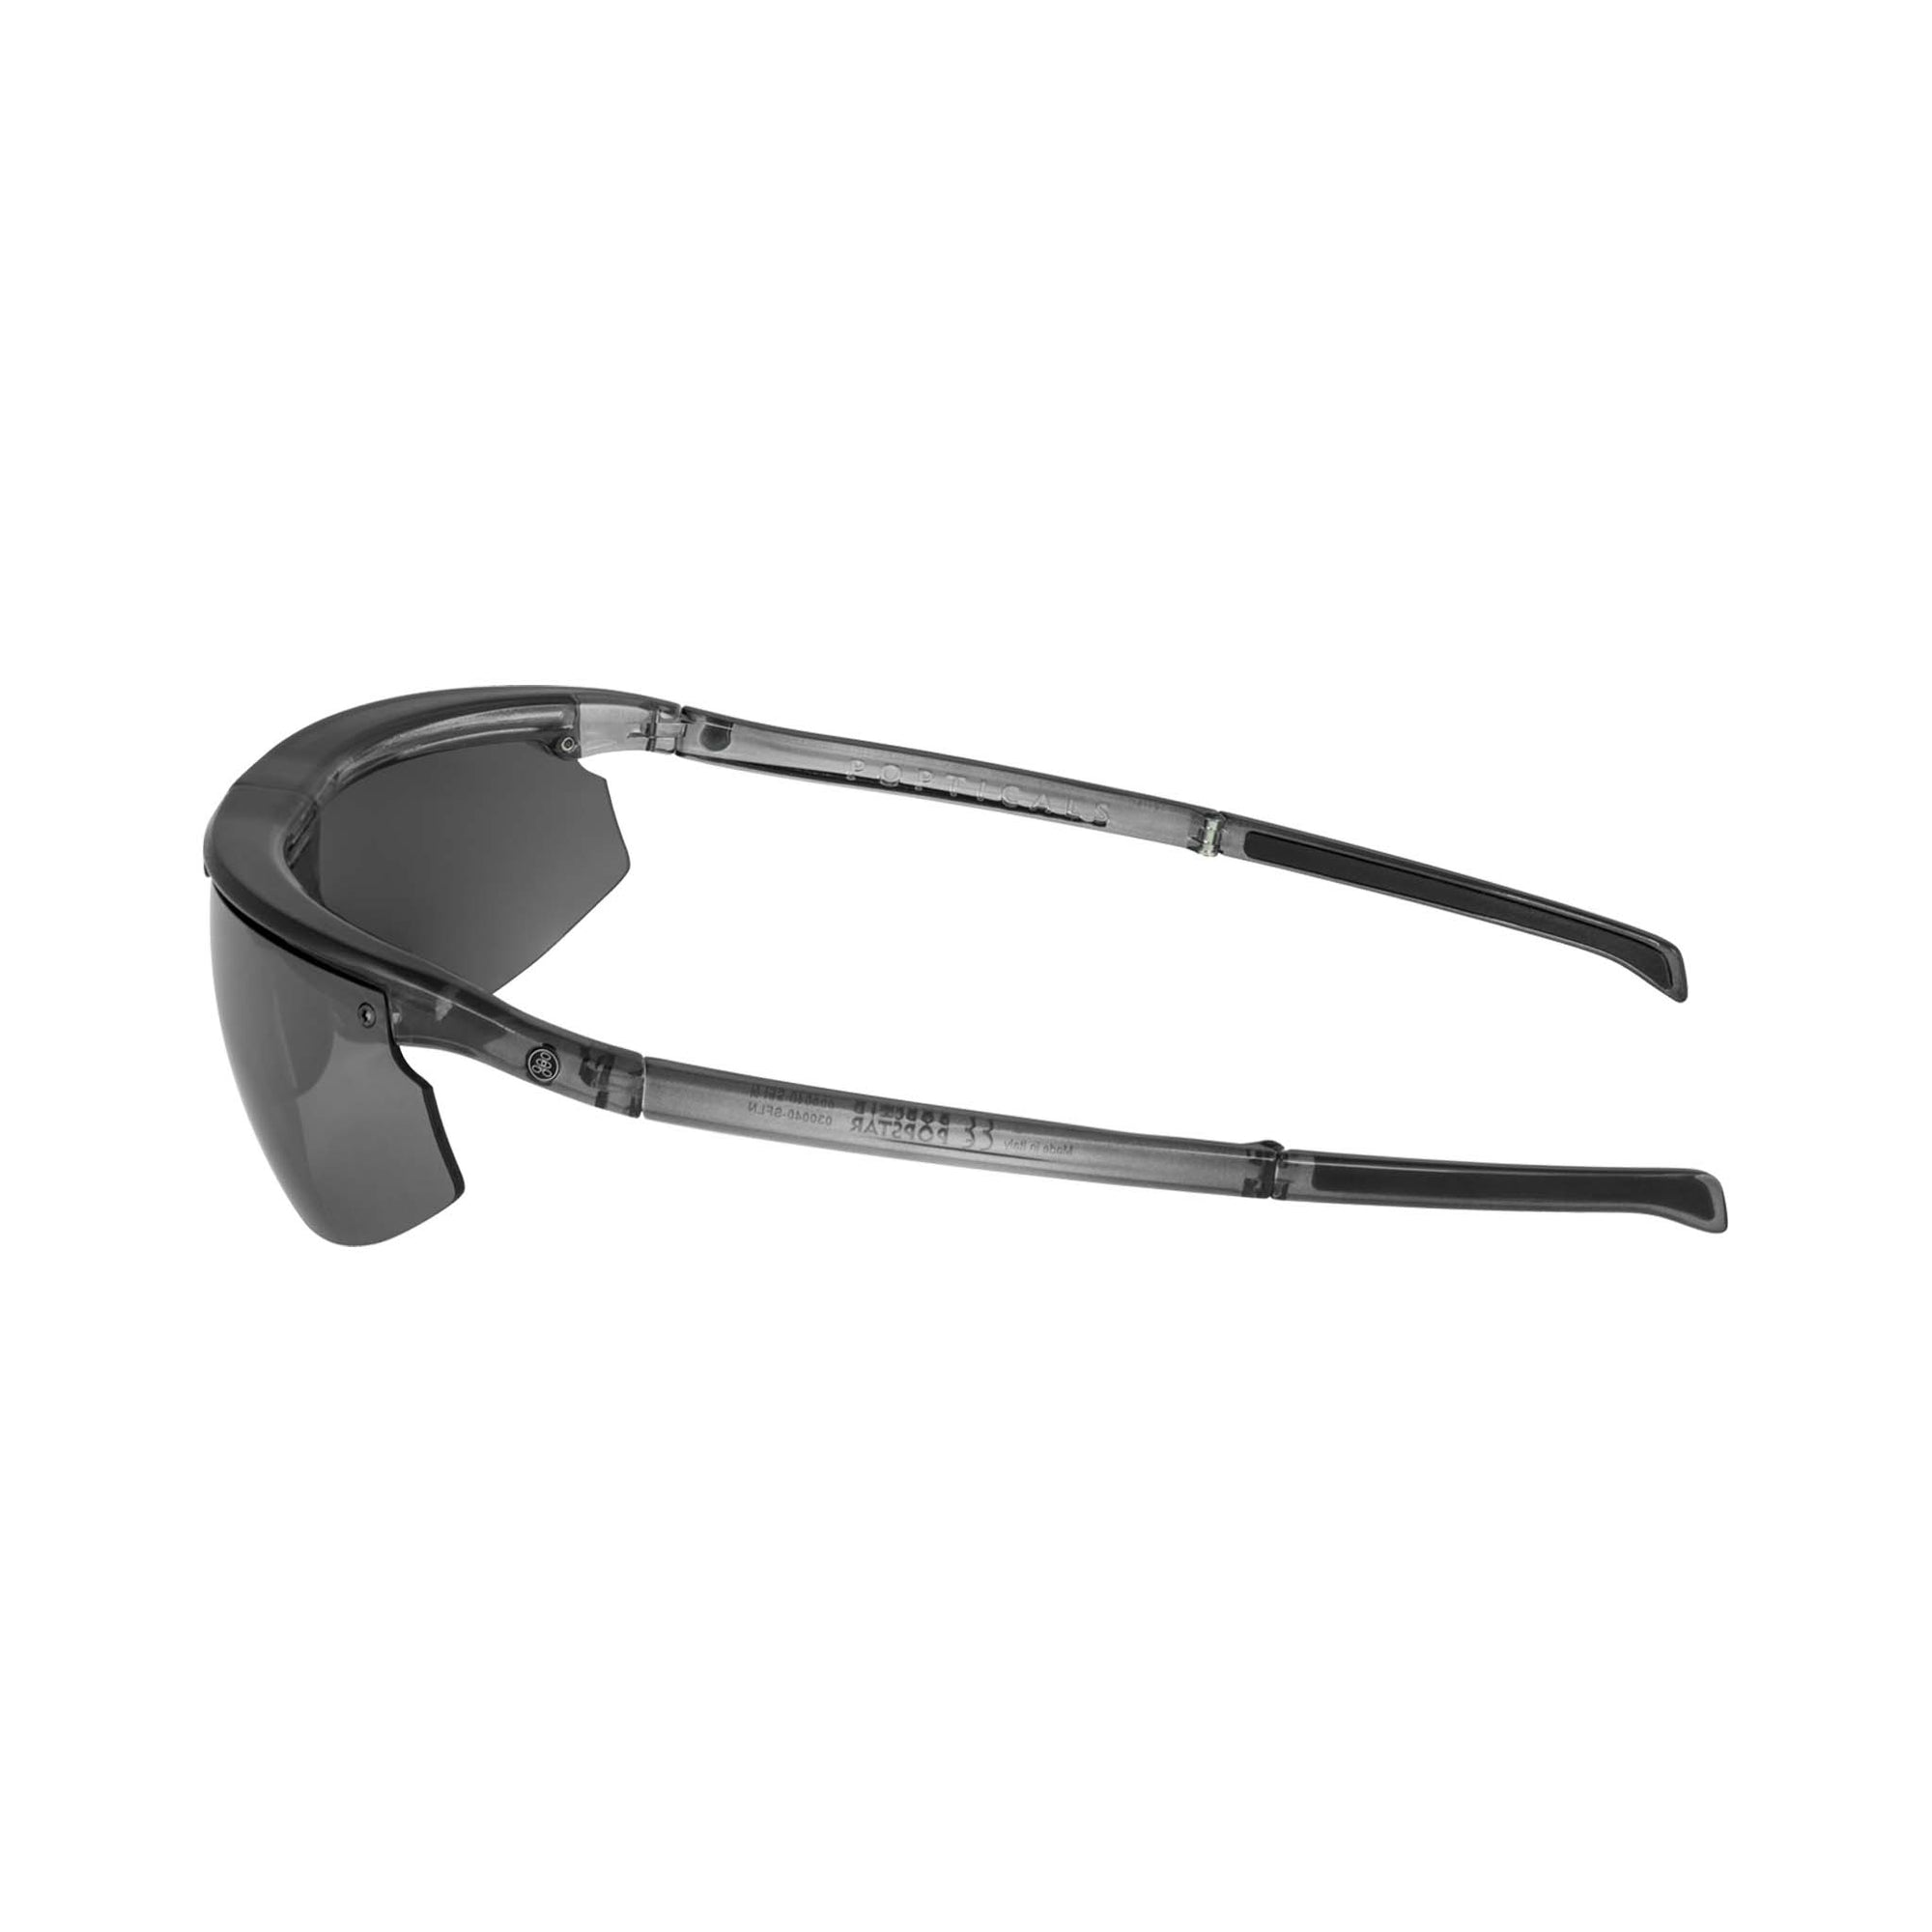 Popticals, Premium Compact Sunglasses, PopStar, 030040-SFLN, Polarized Sunglasses, Gloss Smoke/Clear Crystal Frame, Gray Lenses w/Silver Mirror Finish, Side View